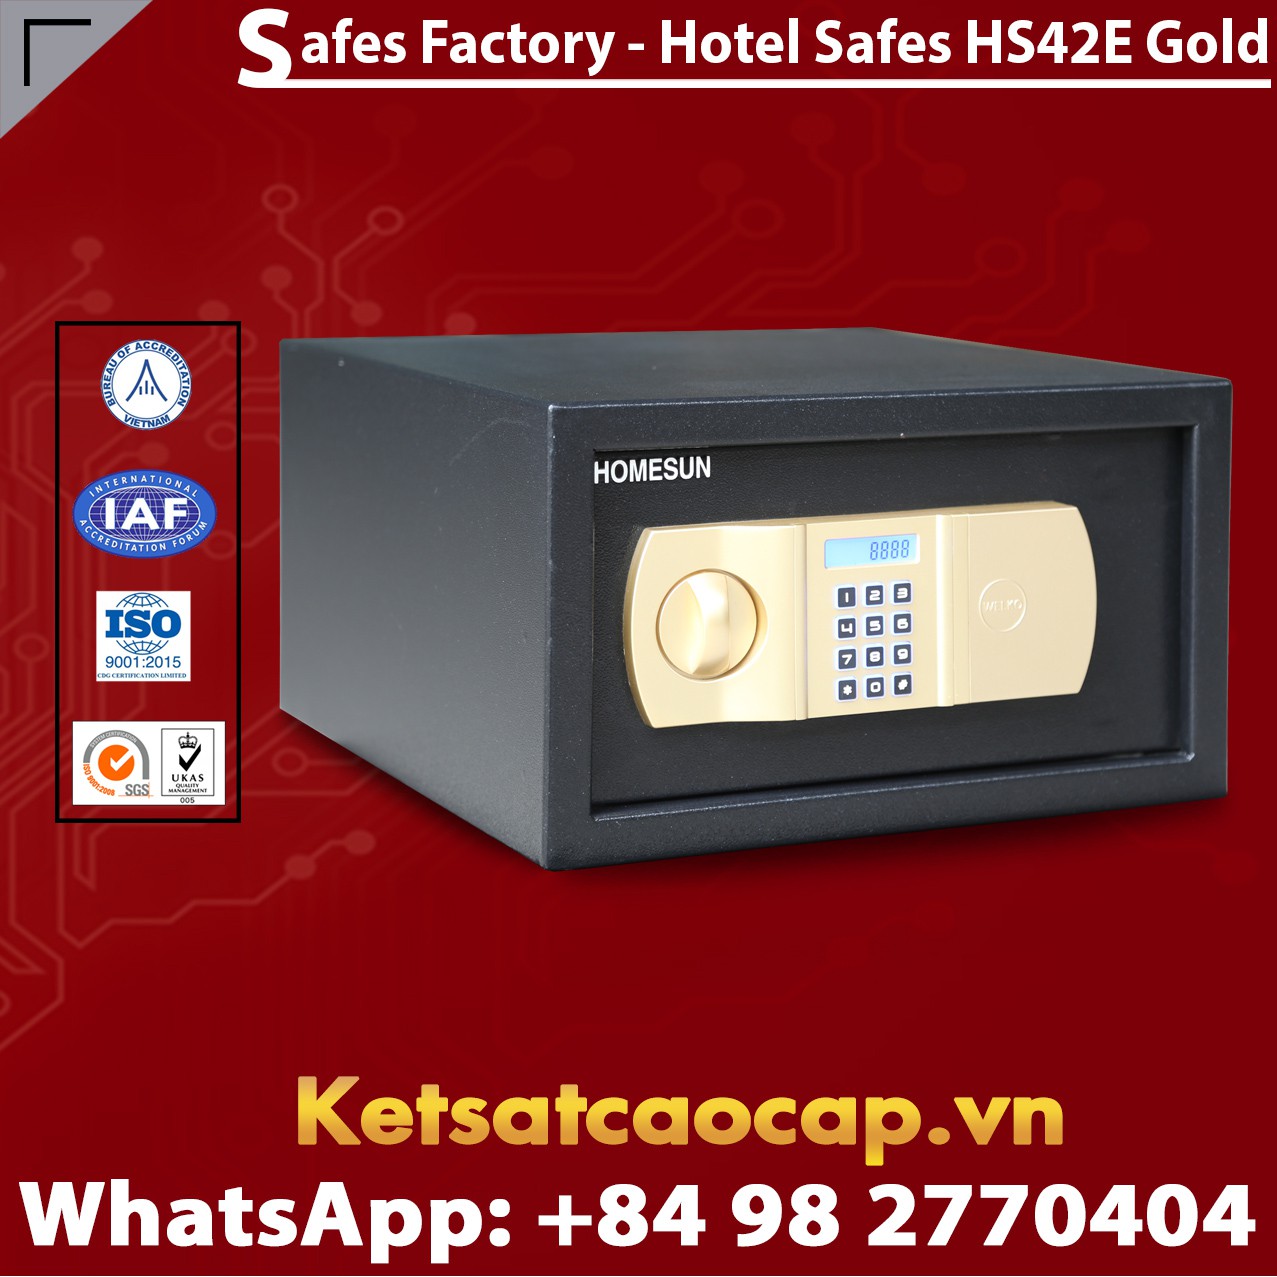 Hotel Safety Deposit Box HOMESUN HS42 E Gold